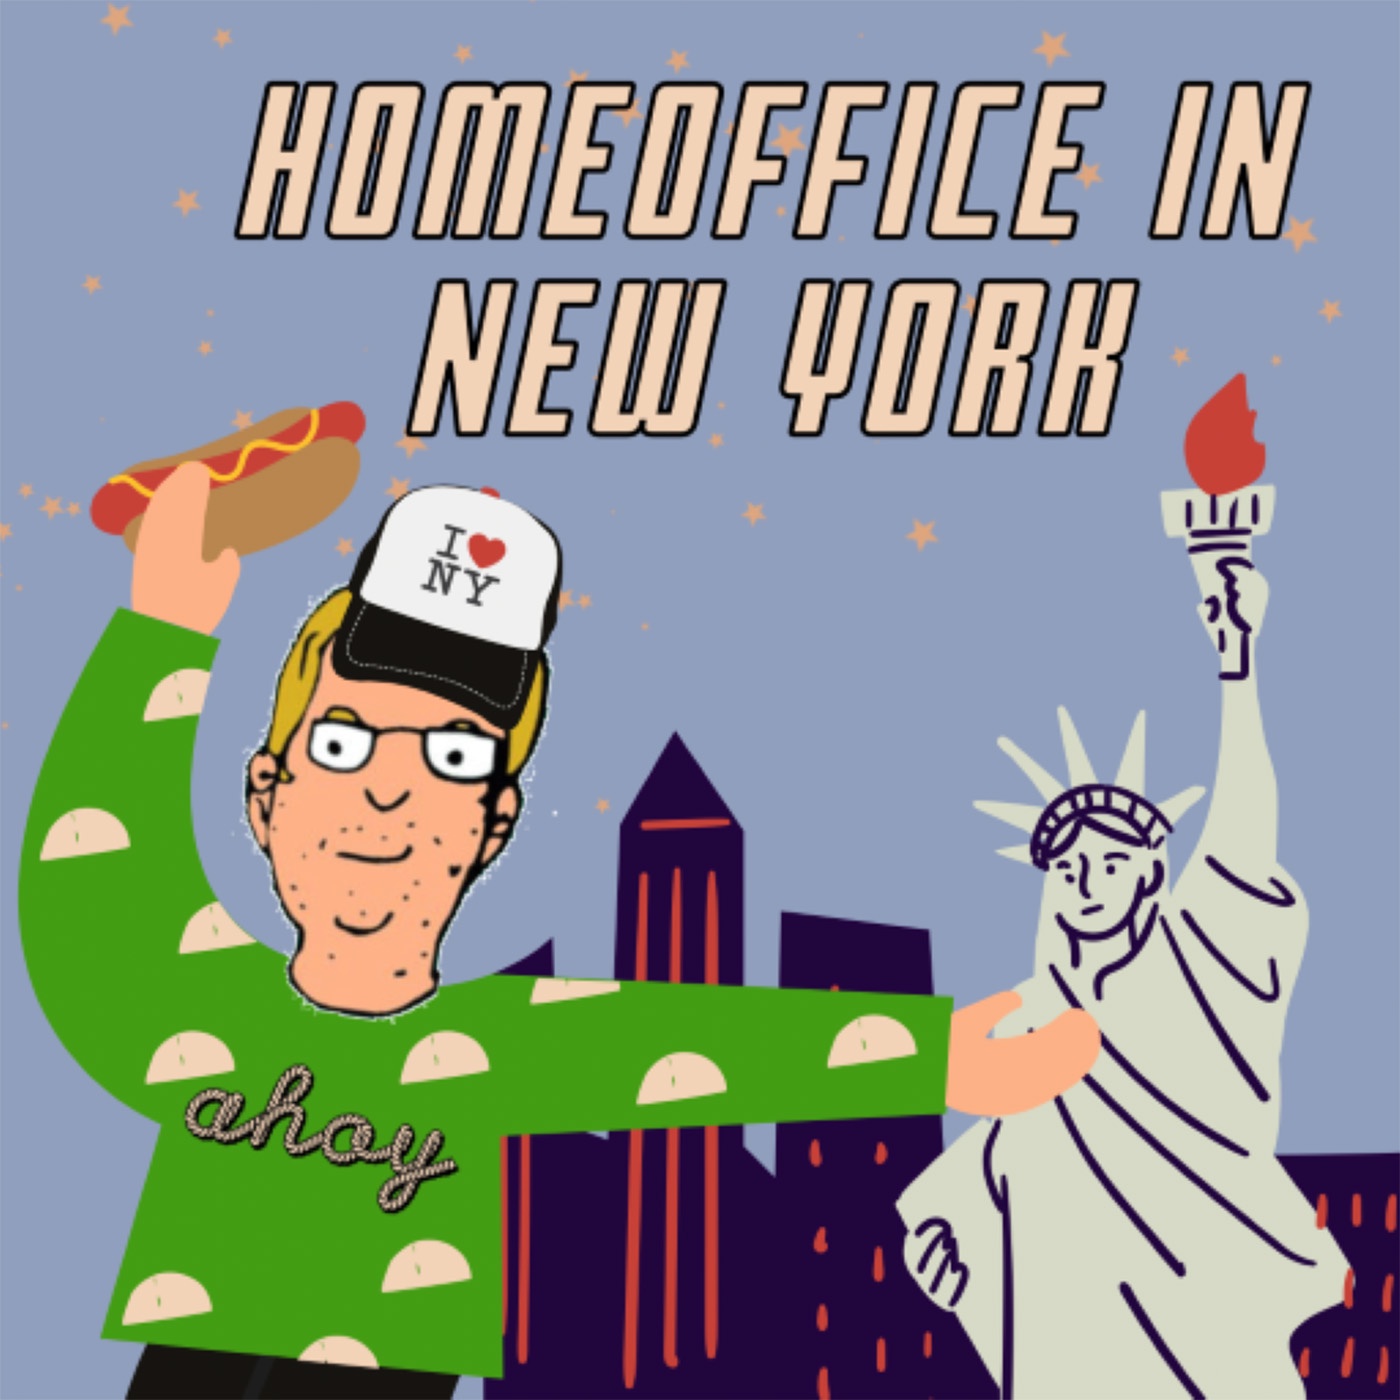 Homeoffice in New York